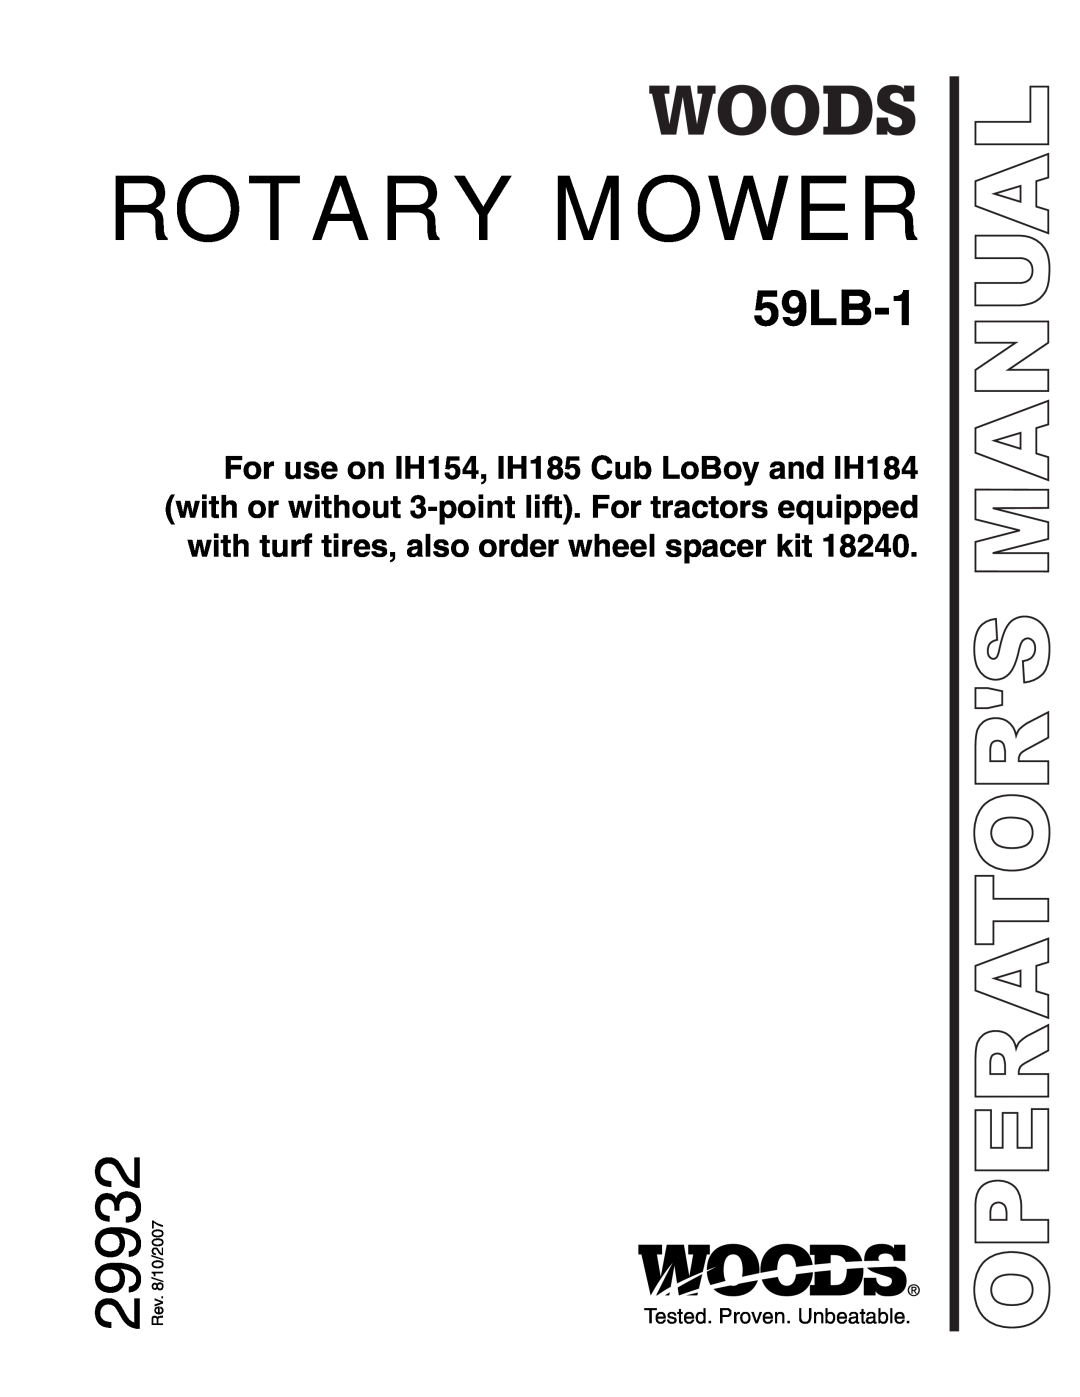 Woods Equipment 59LB-1 manual Tested. Proven. Unbeatable, Rotary Mower, 29932, Operators Manual 